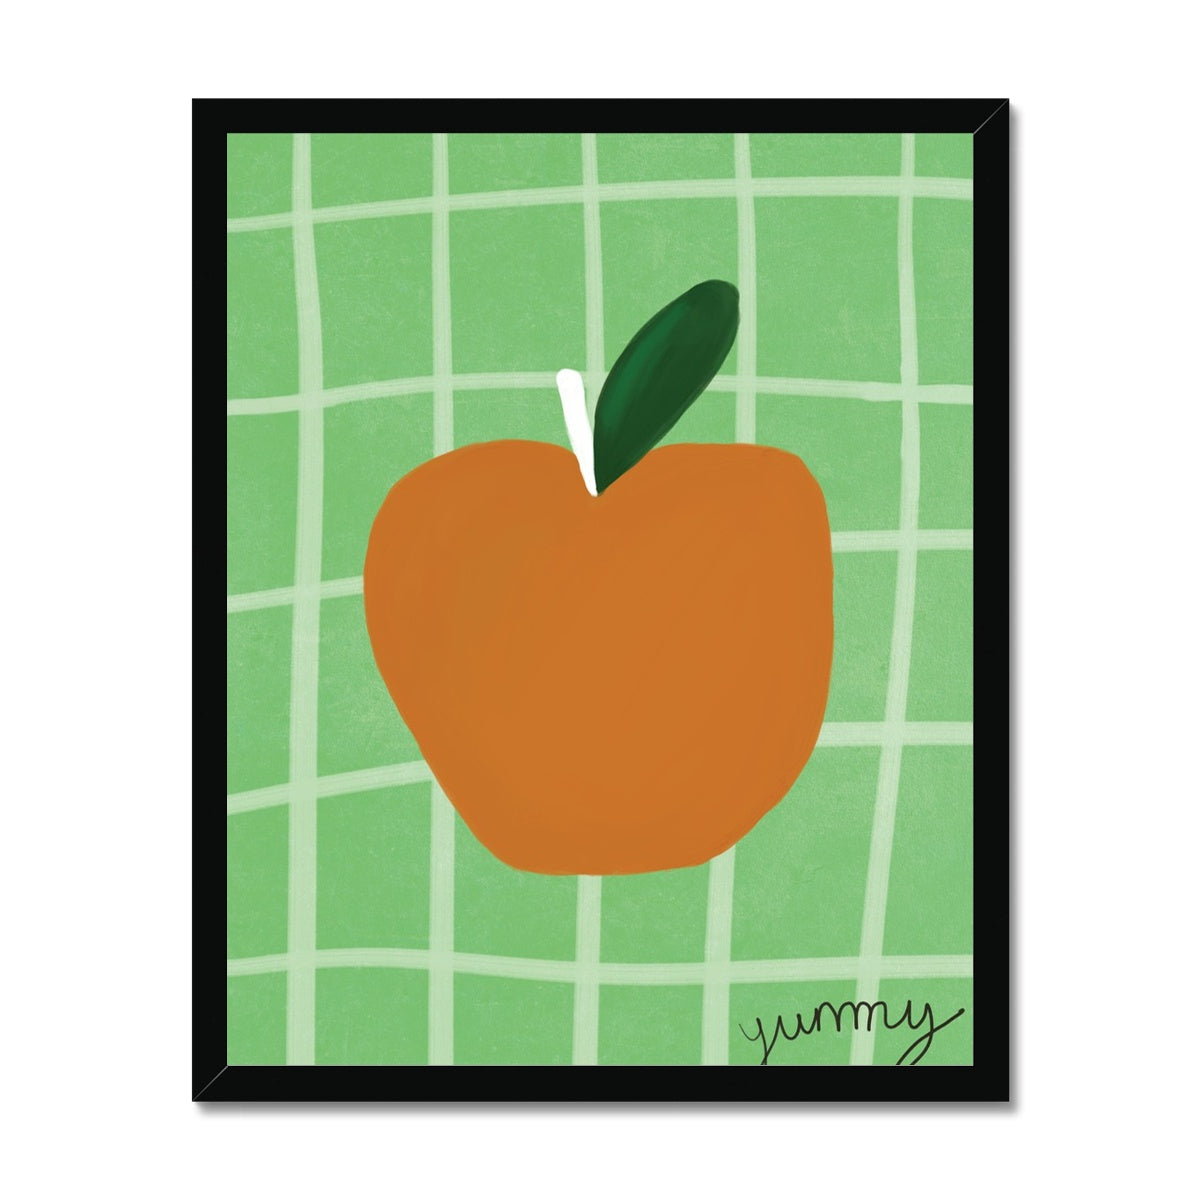 Yummy Apple Print - Green, Brown Framed Print